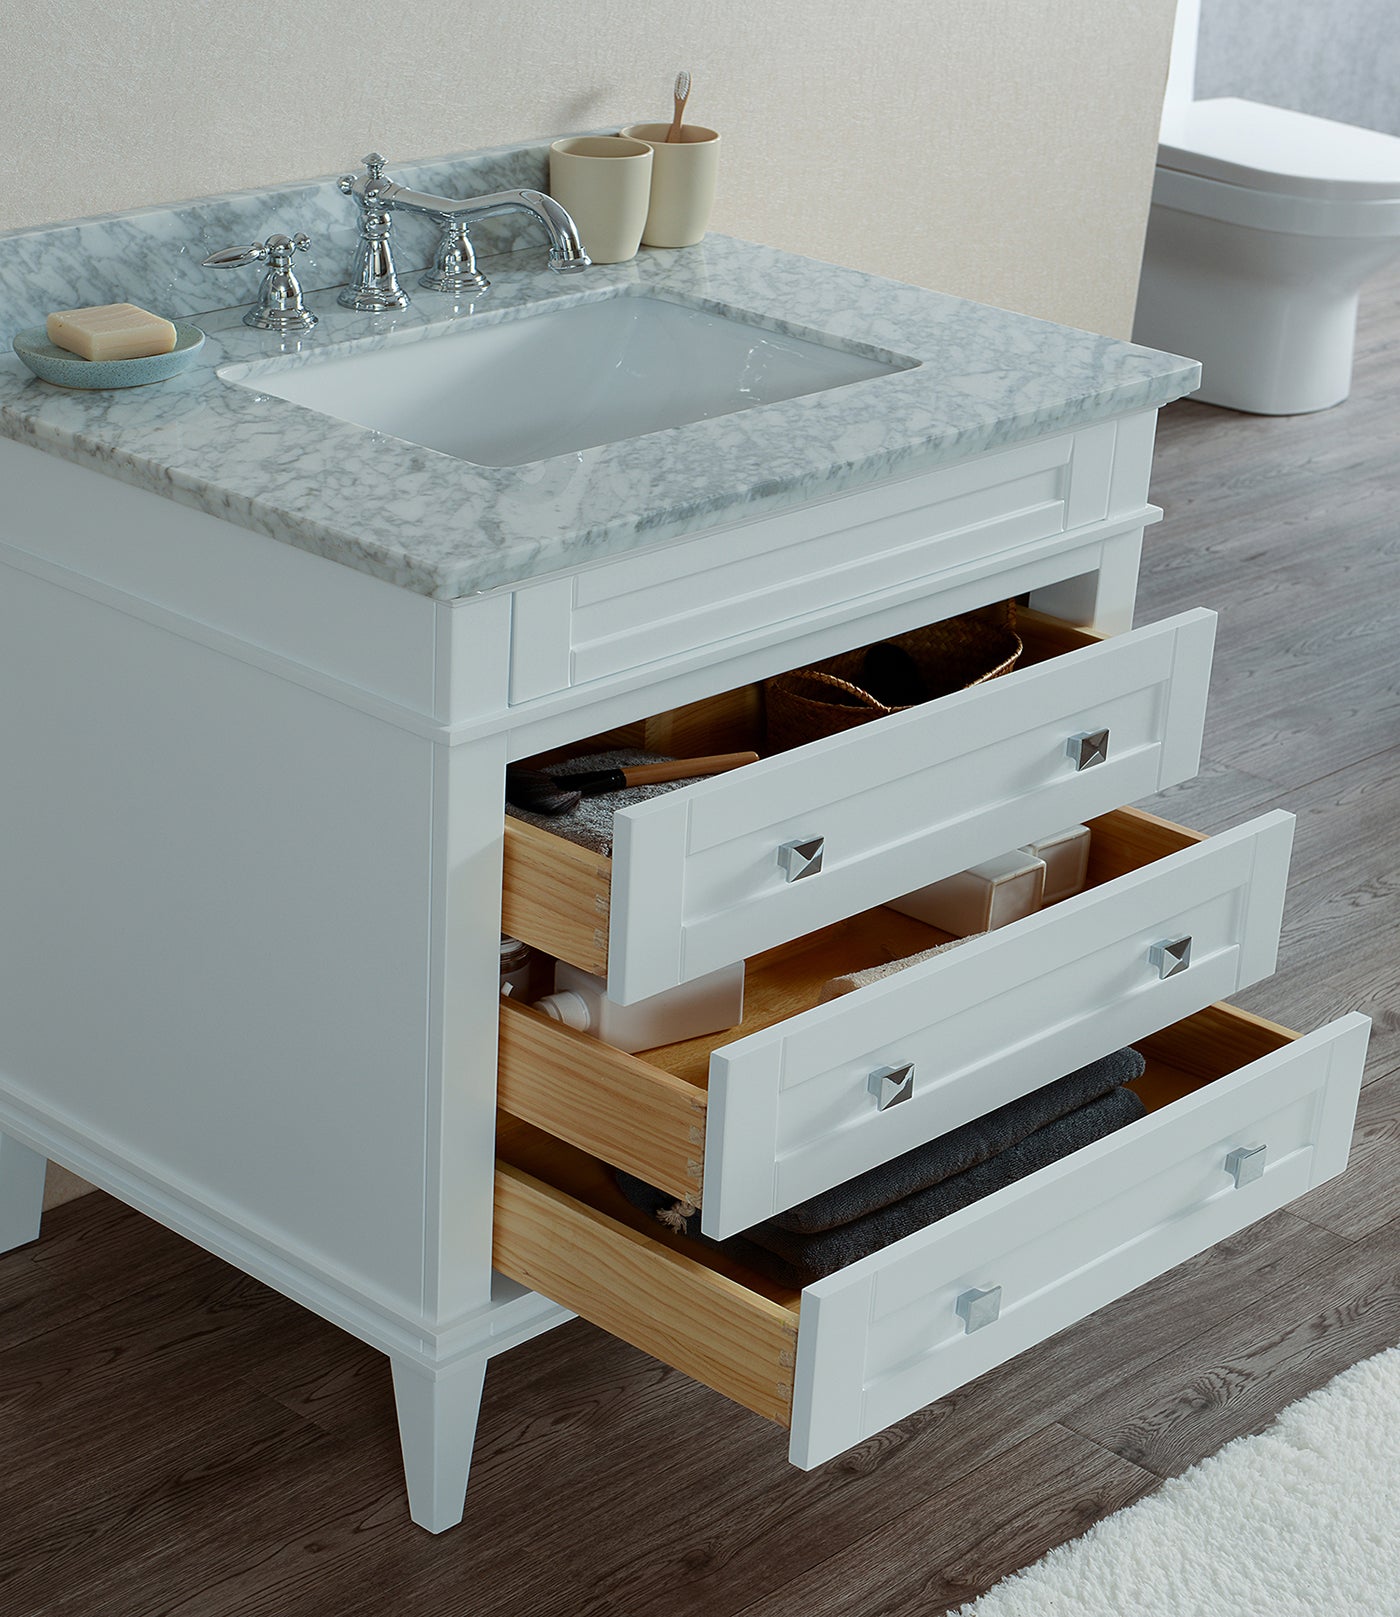 Legion Furniture 36" White/Blue Bathroom Vanity & Sink WS3136 (36" x 22" x 34")